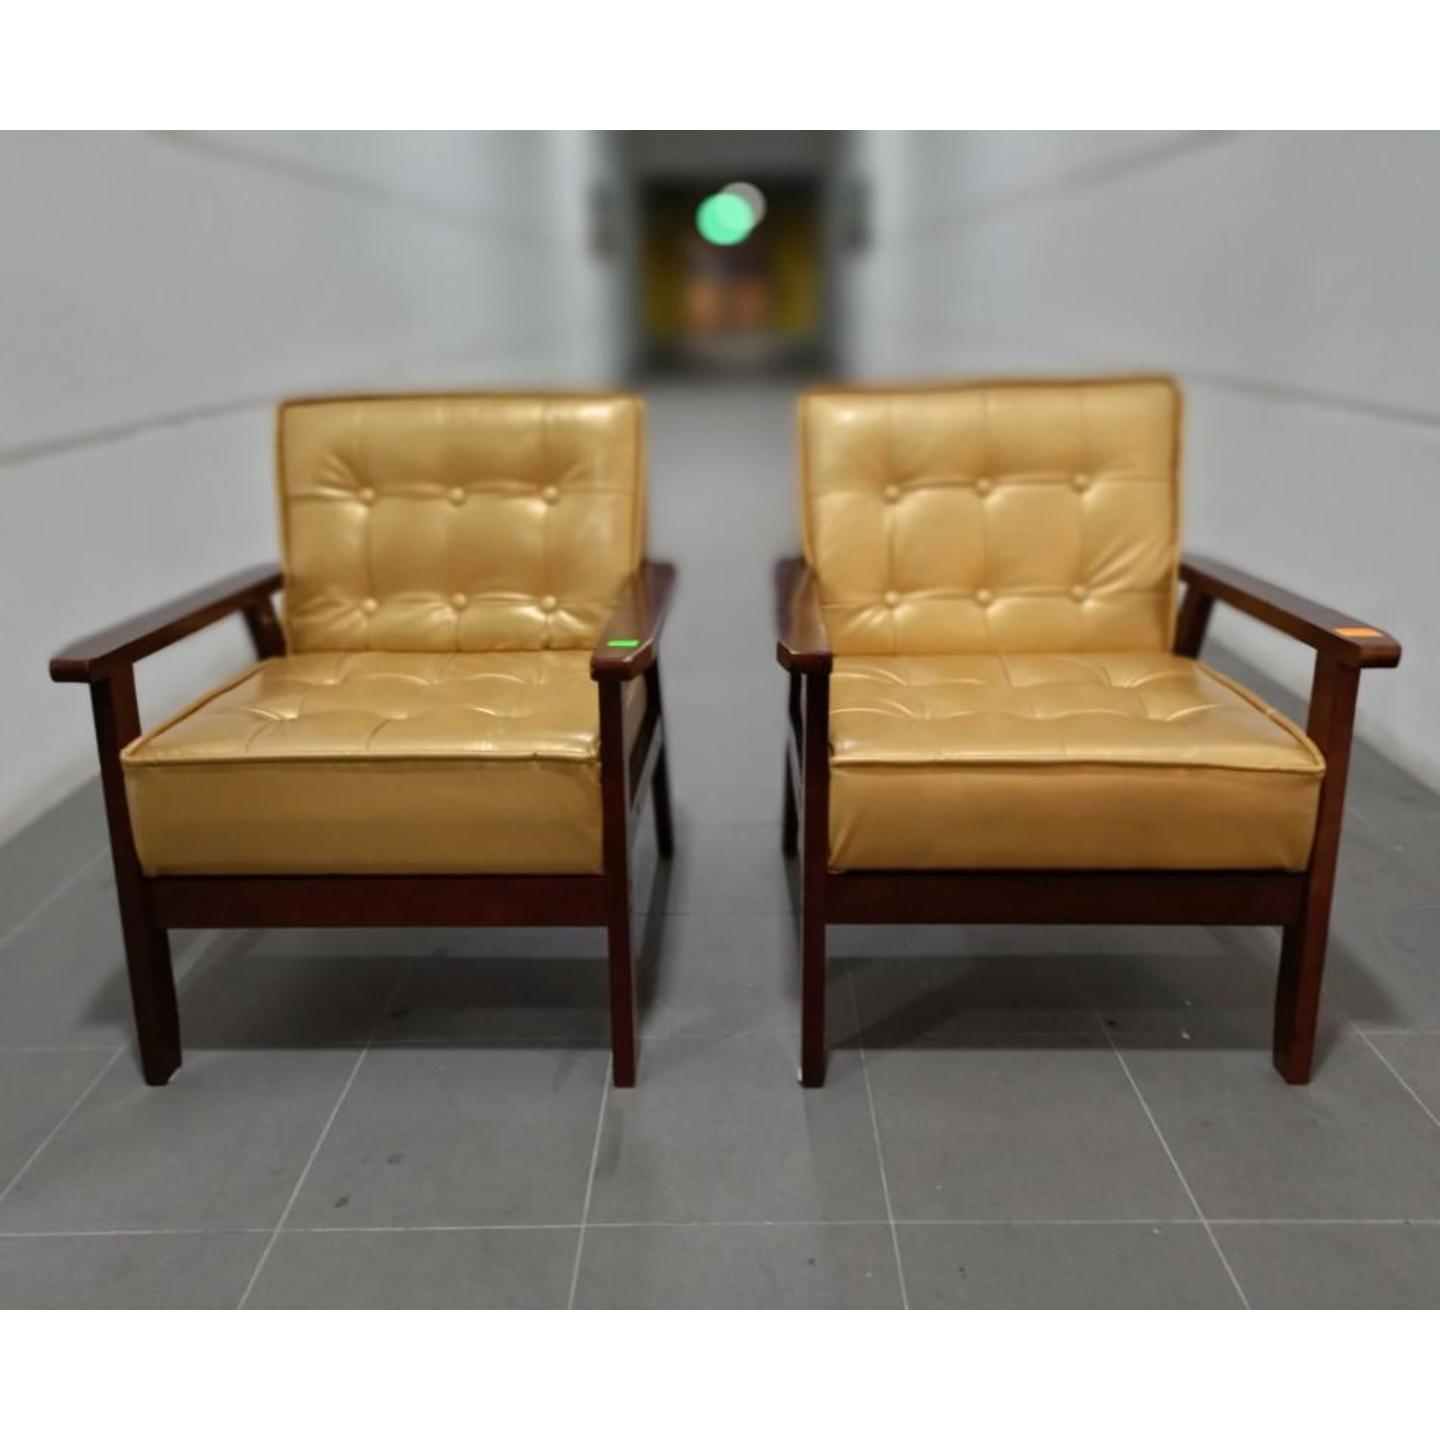 2 x VANZ Single Armchairs in GOLD PU